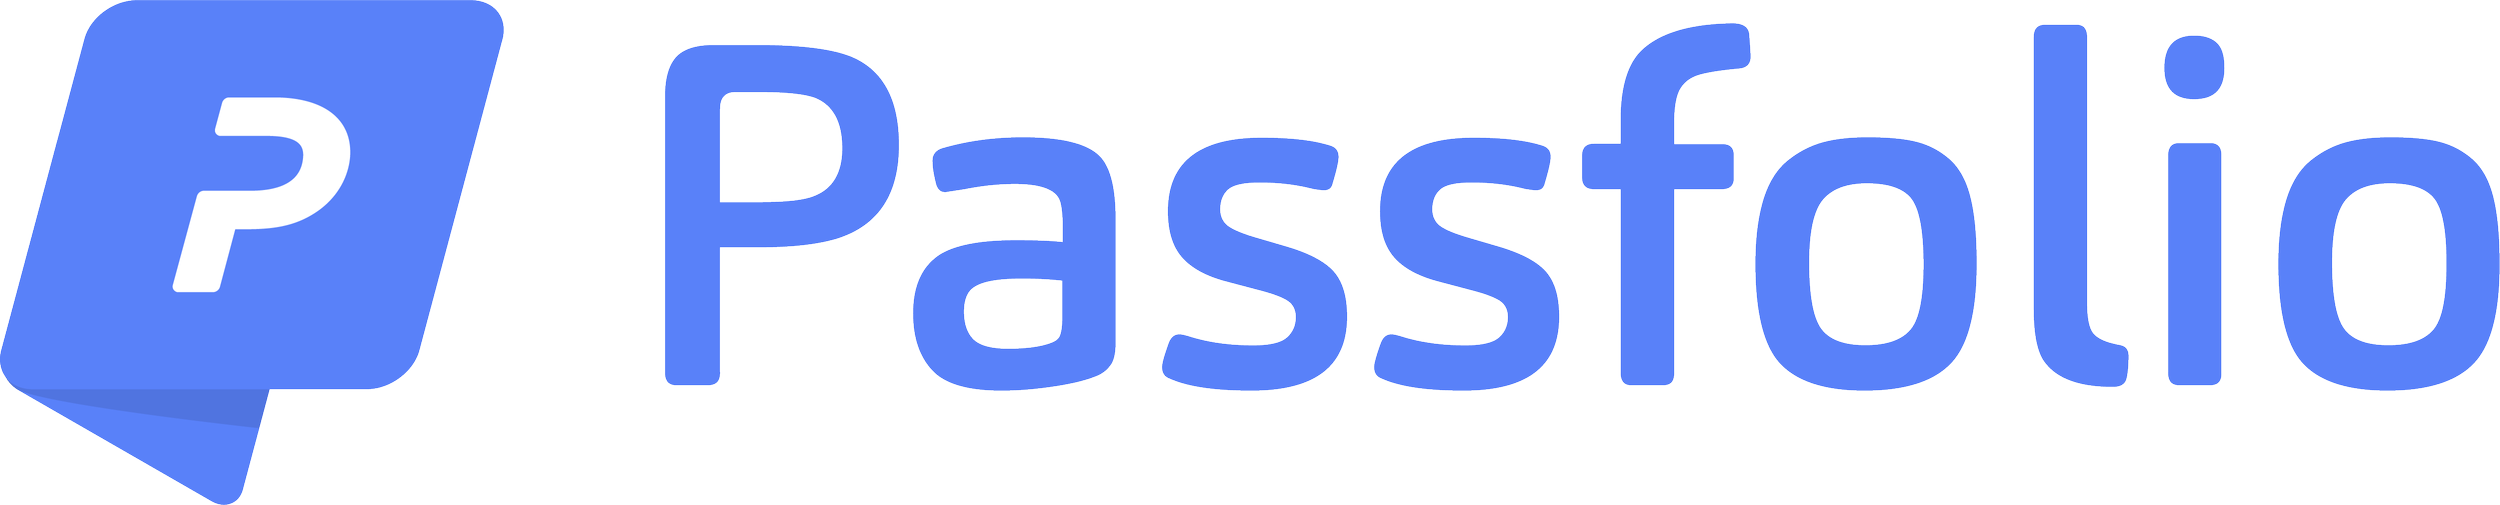 Passfolio text logo.png